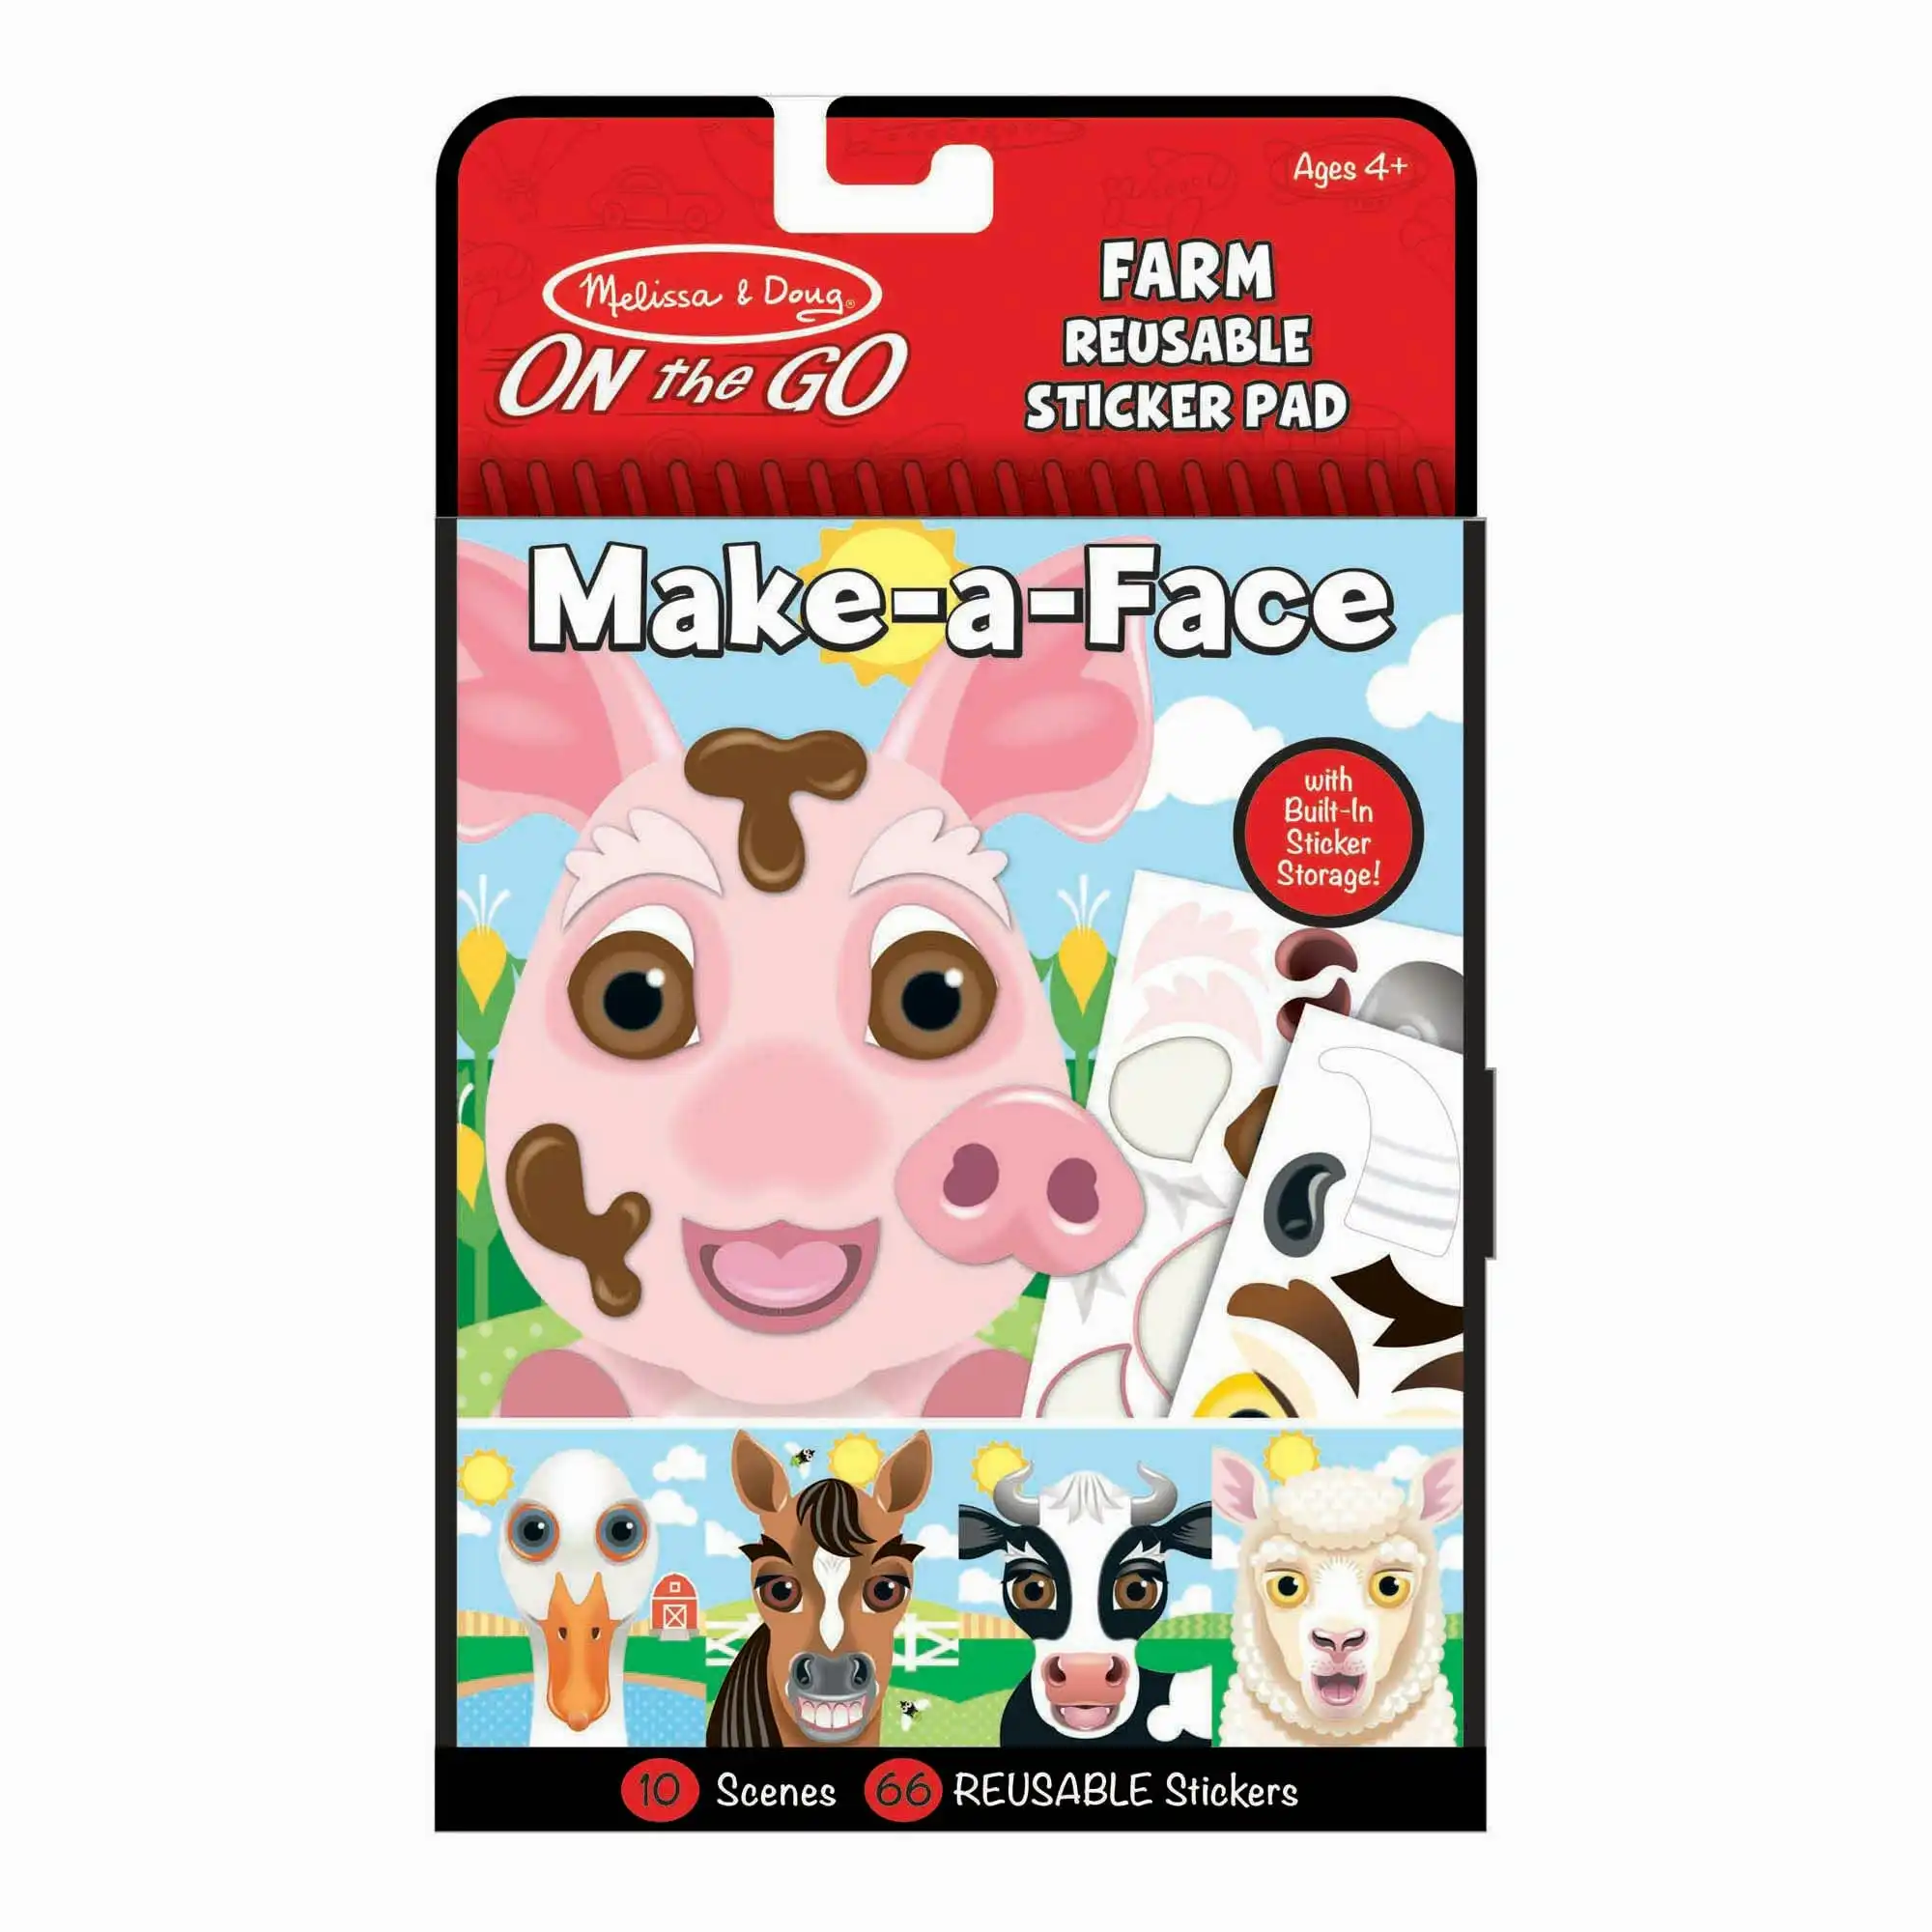 Melissa & Doug - Make-a-face - Farm Reusable Sticker Pad - On The Go Travel Activity